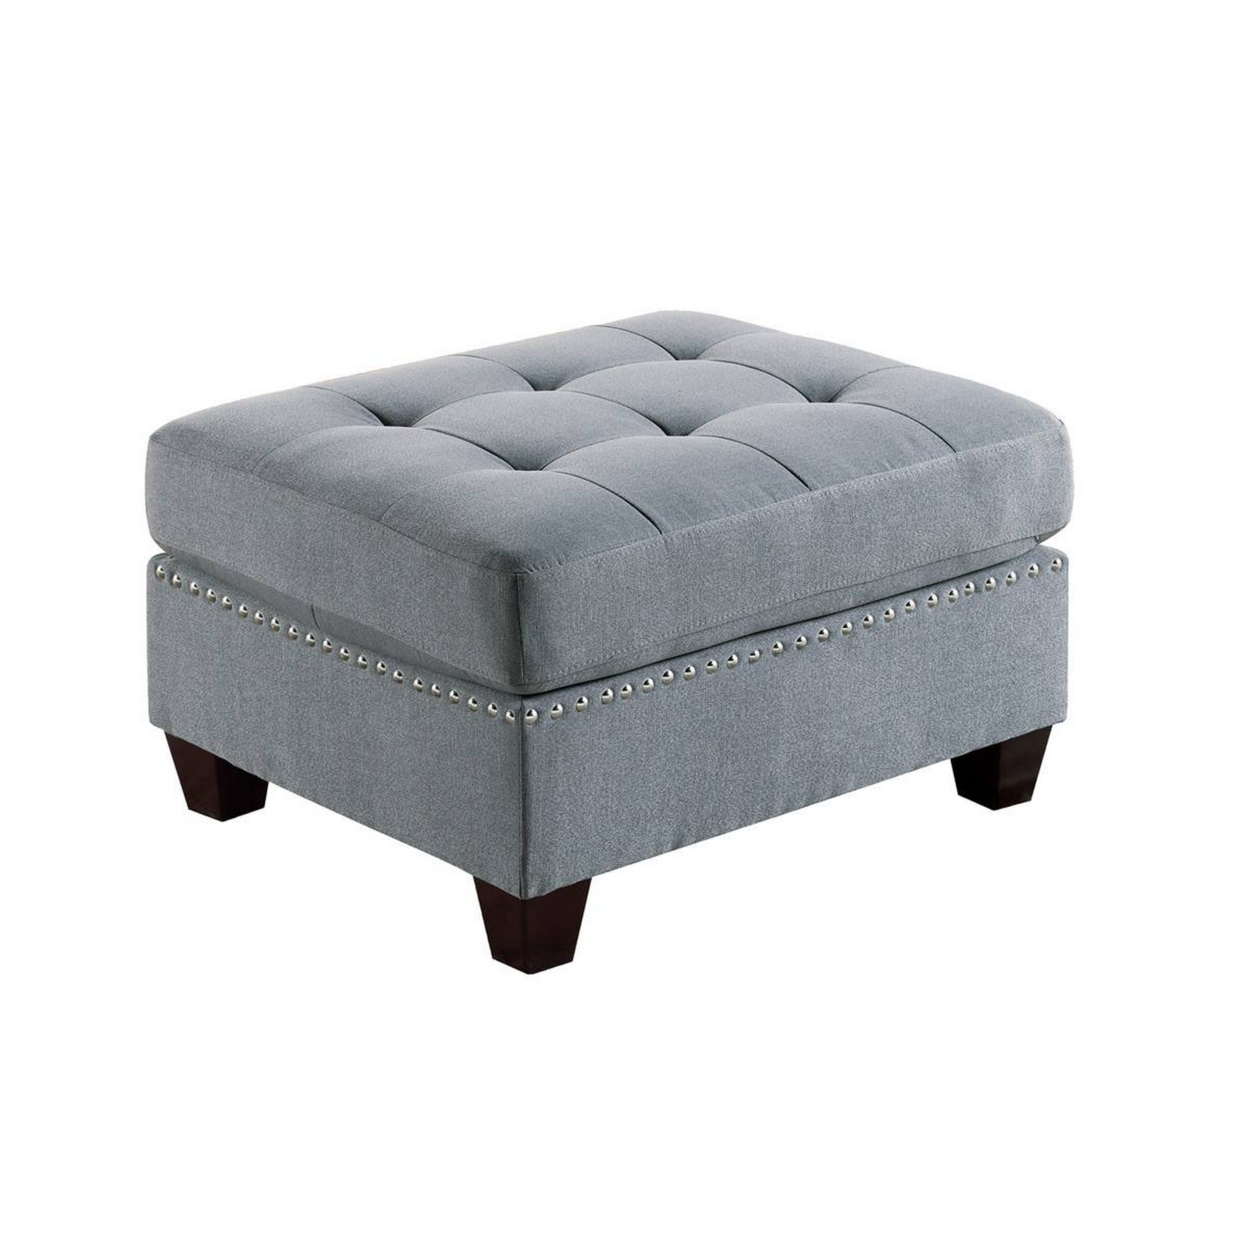 Pali 32 Inch Modern Square Ottoman, Foam Tufted Seat, Gray Linen Fabric